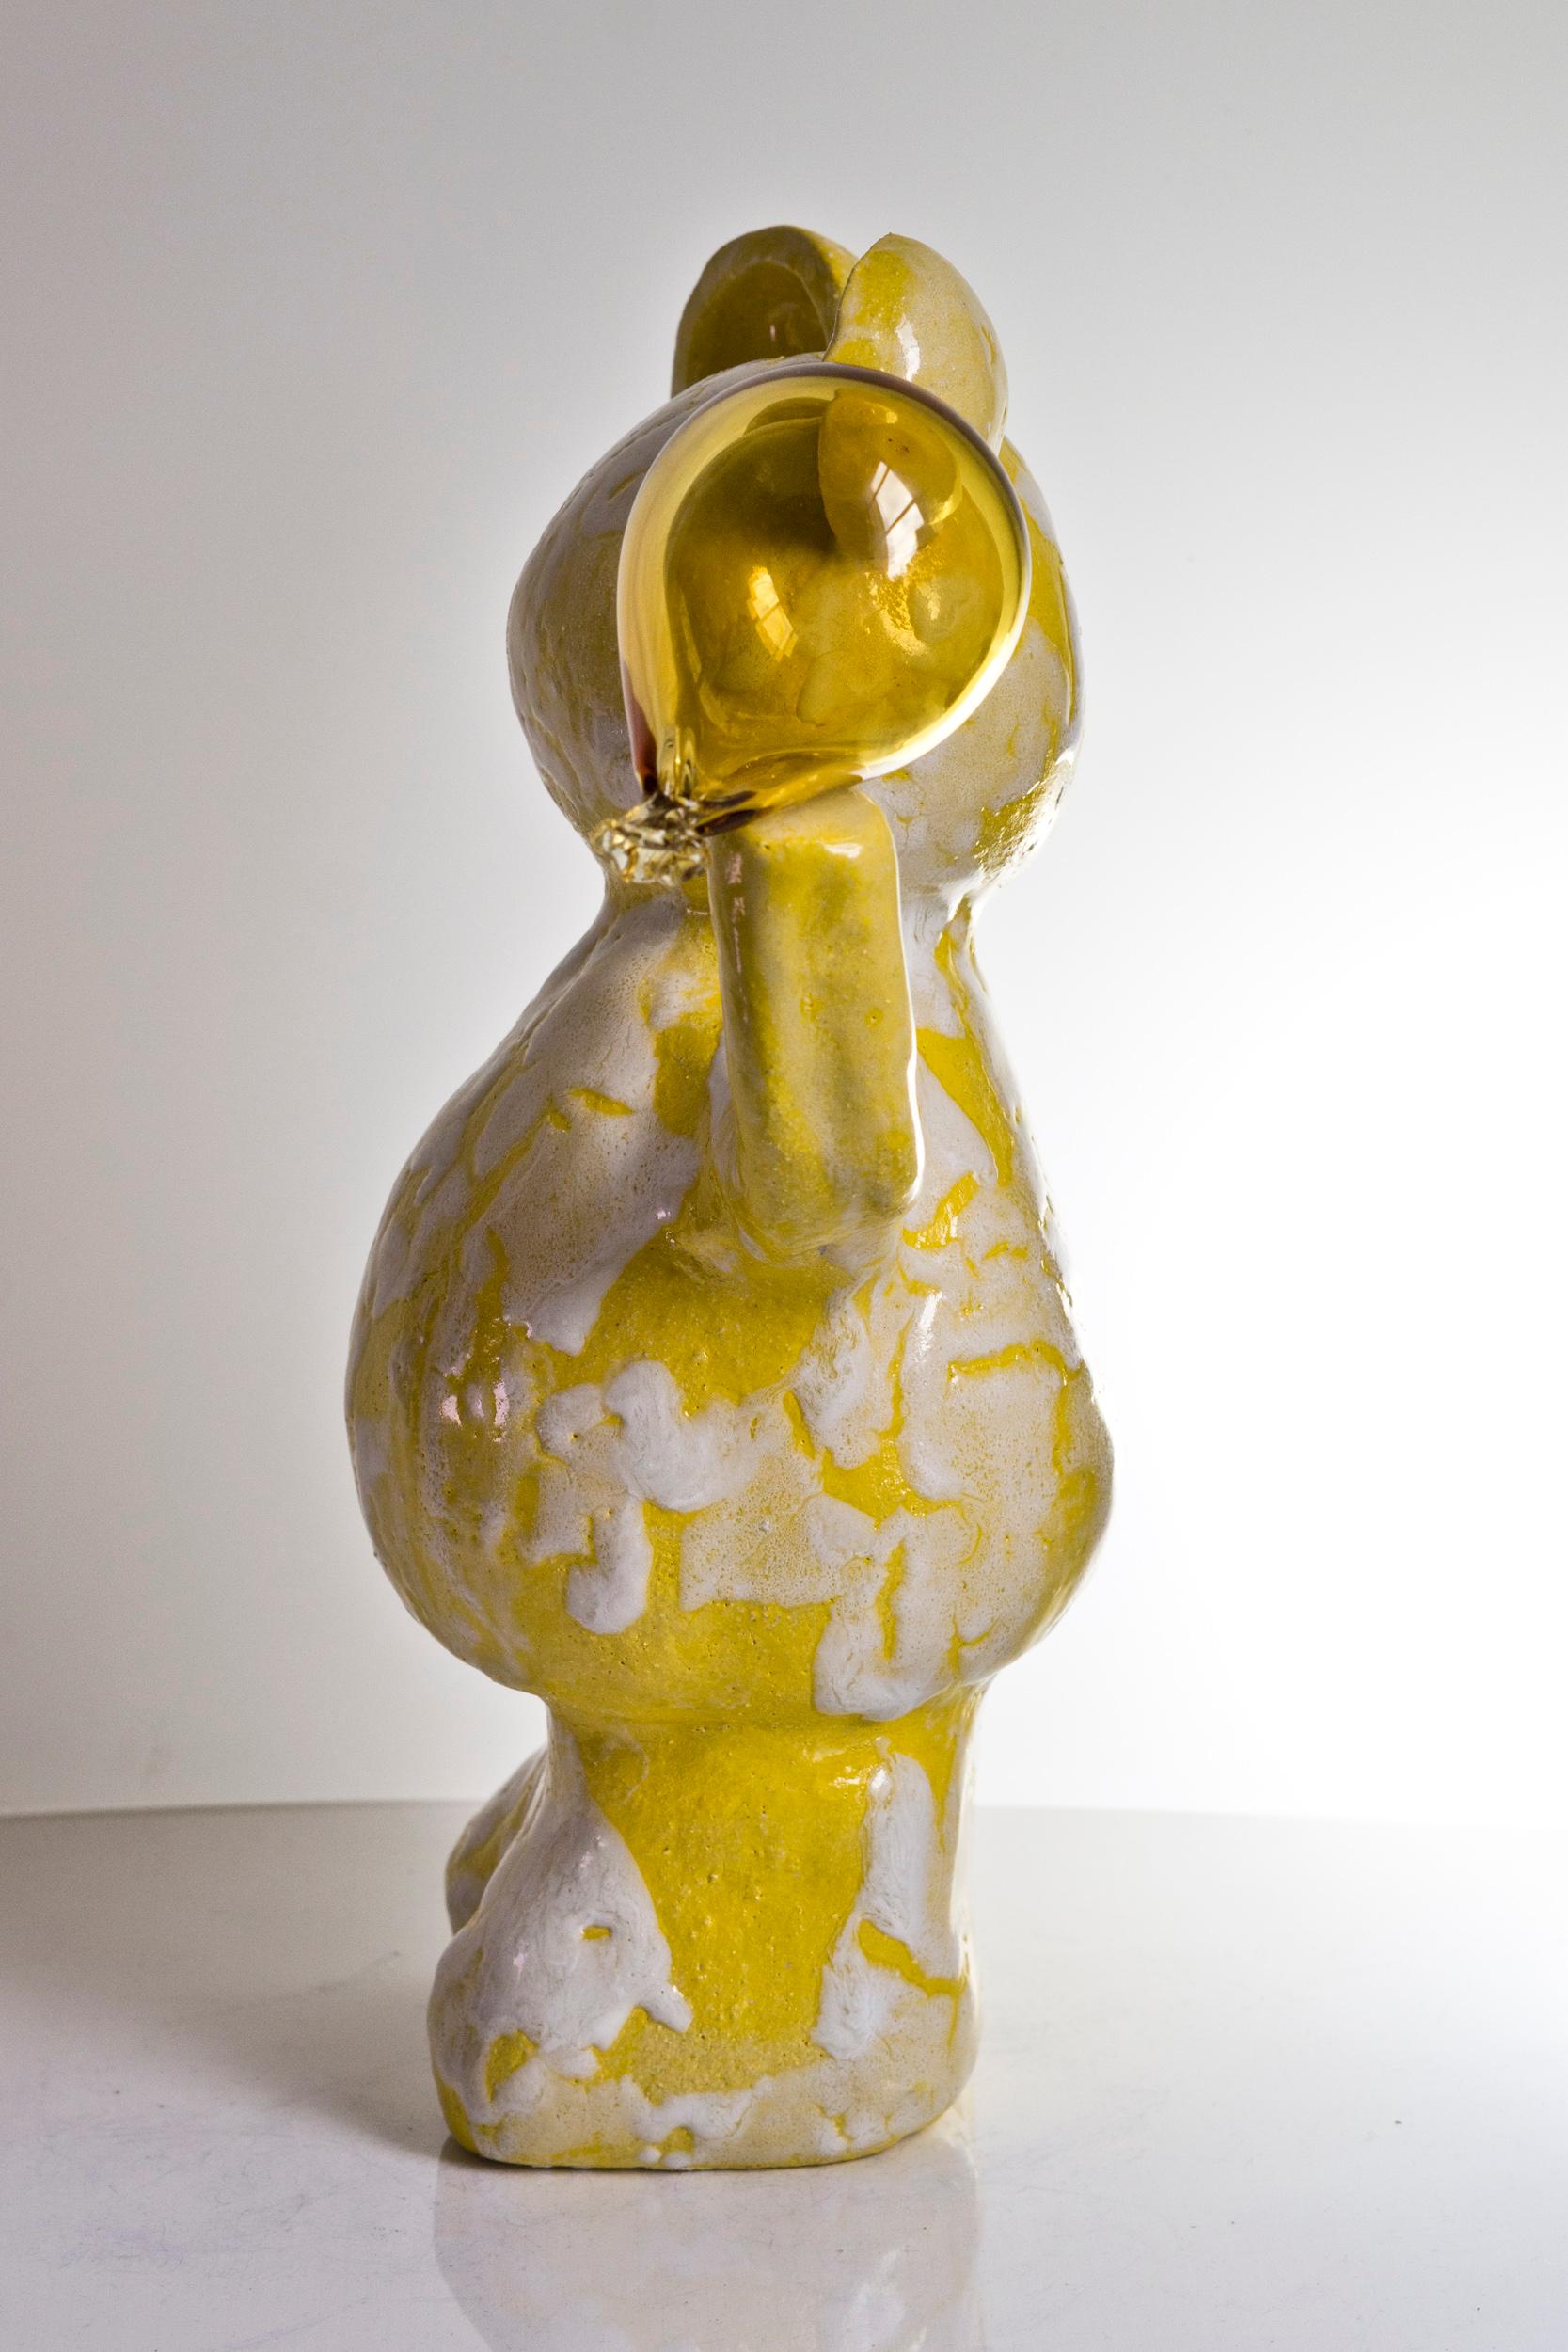 The Optimistic Teddy - Beige Figurative Sculpture by Agustina Garrigou